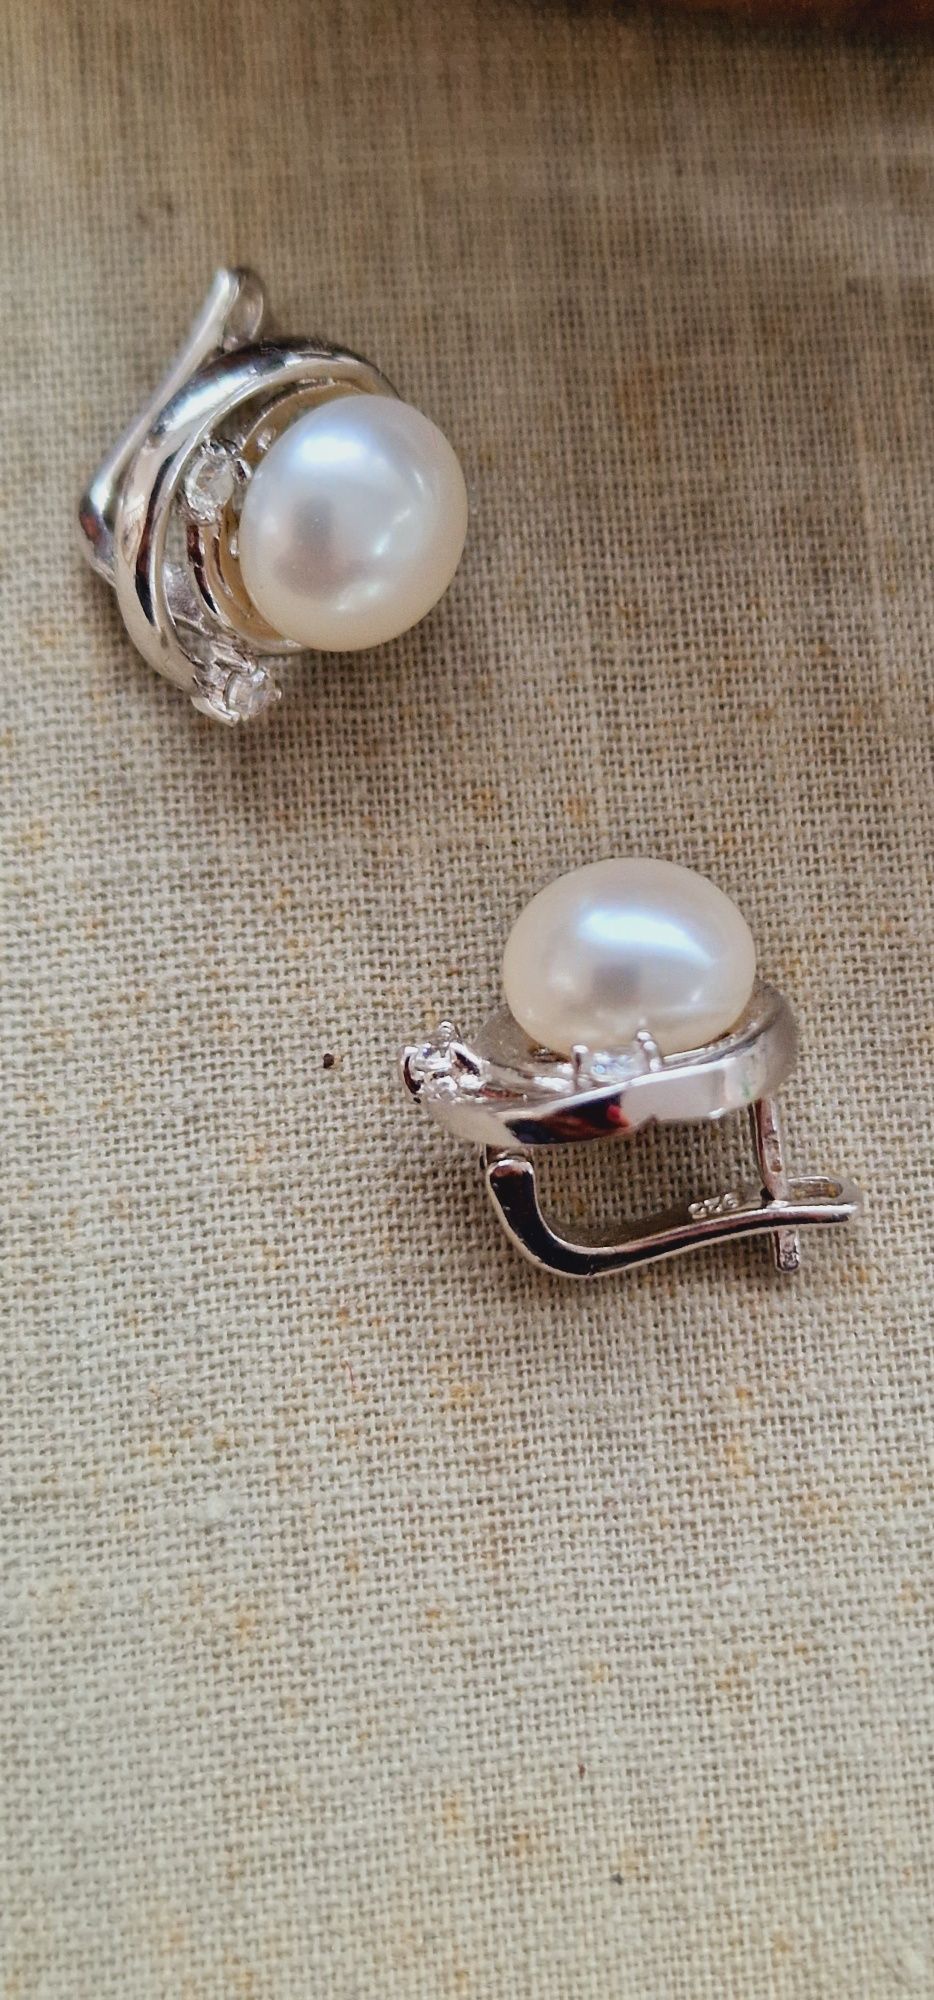 Inel, cercei, pandantiv argint si perle naturale